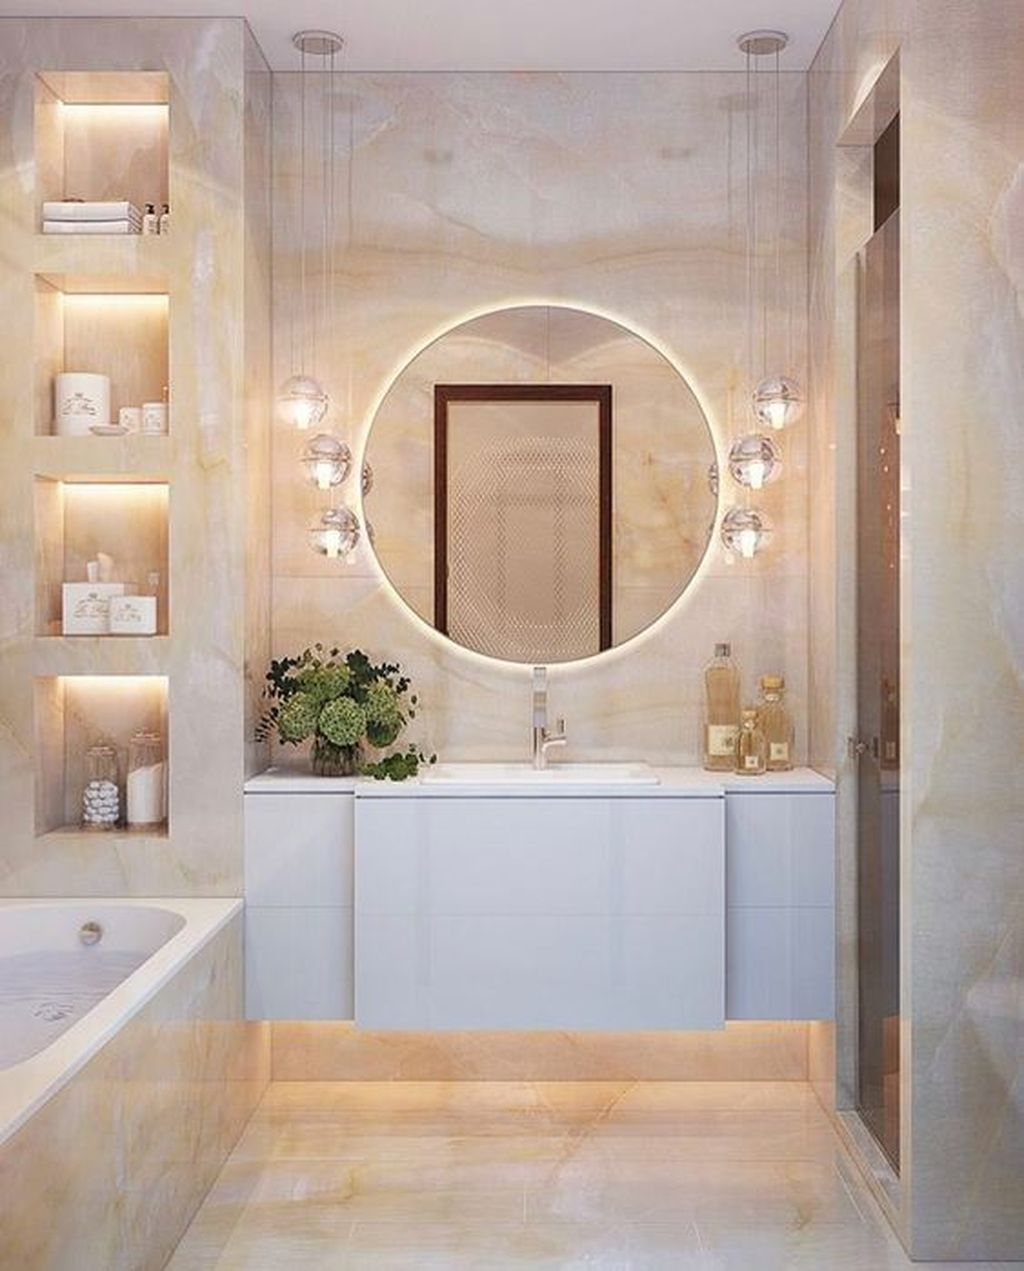 34 Cool Bathroom Mirror Ideas That You Will Like It - DECORKEUN